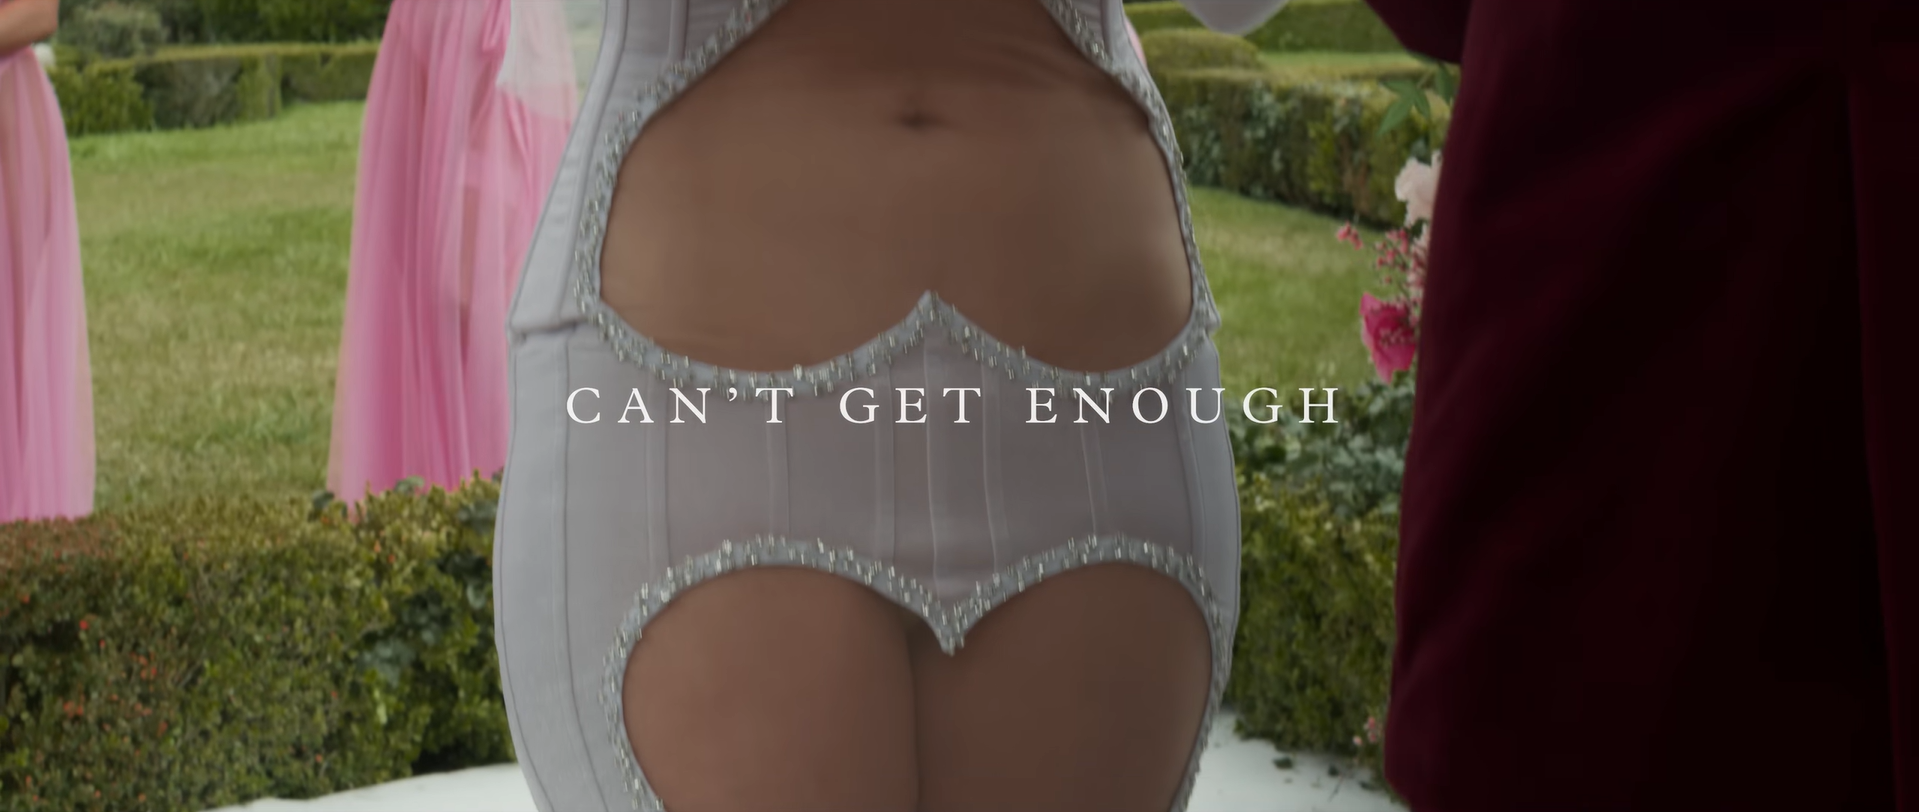 Jennifer Lopez presented her new music video Can't Get Enough in a dress by Ukrainian designer Ivan Frolov